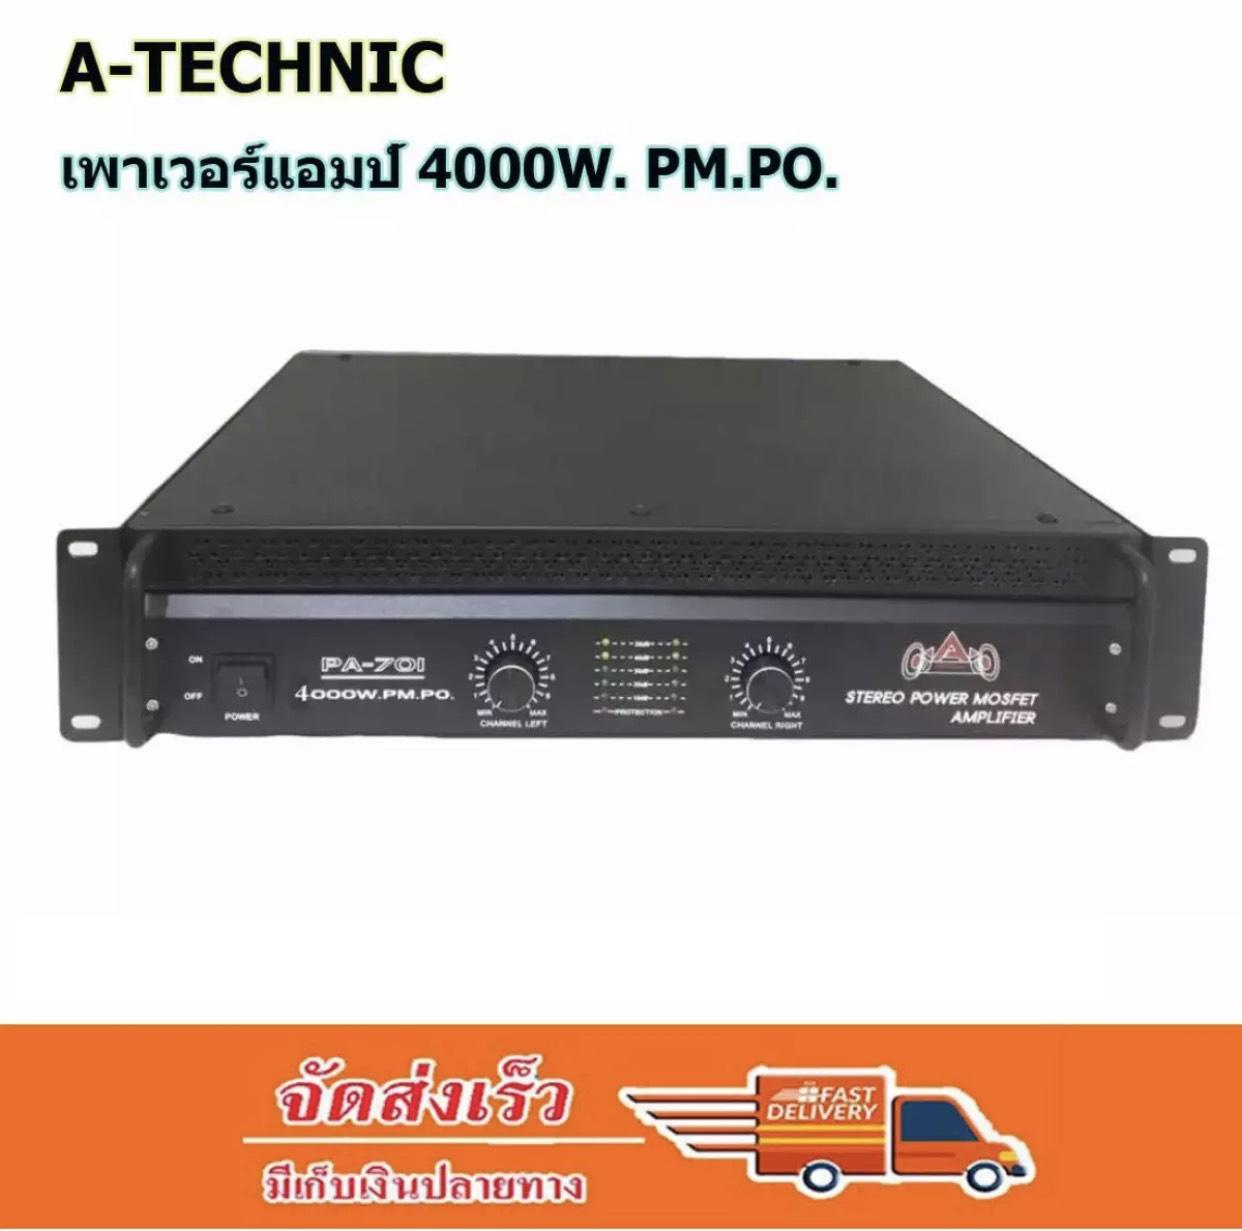 A-TECHNIC Professional poweramplifier เพาเวอร์แอมป์ 4000W .PM.PO .เครื่องขยายเสียง รุ่น PA-701